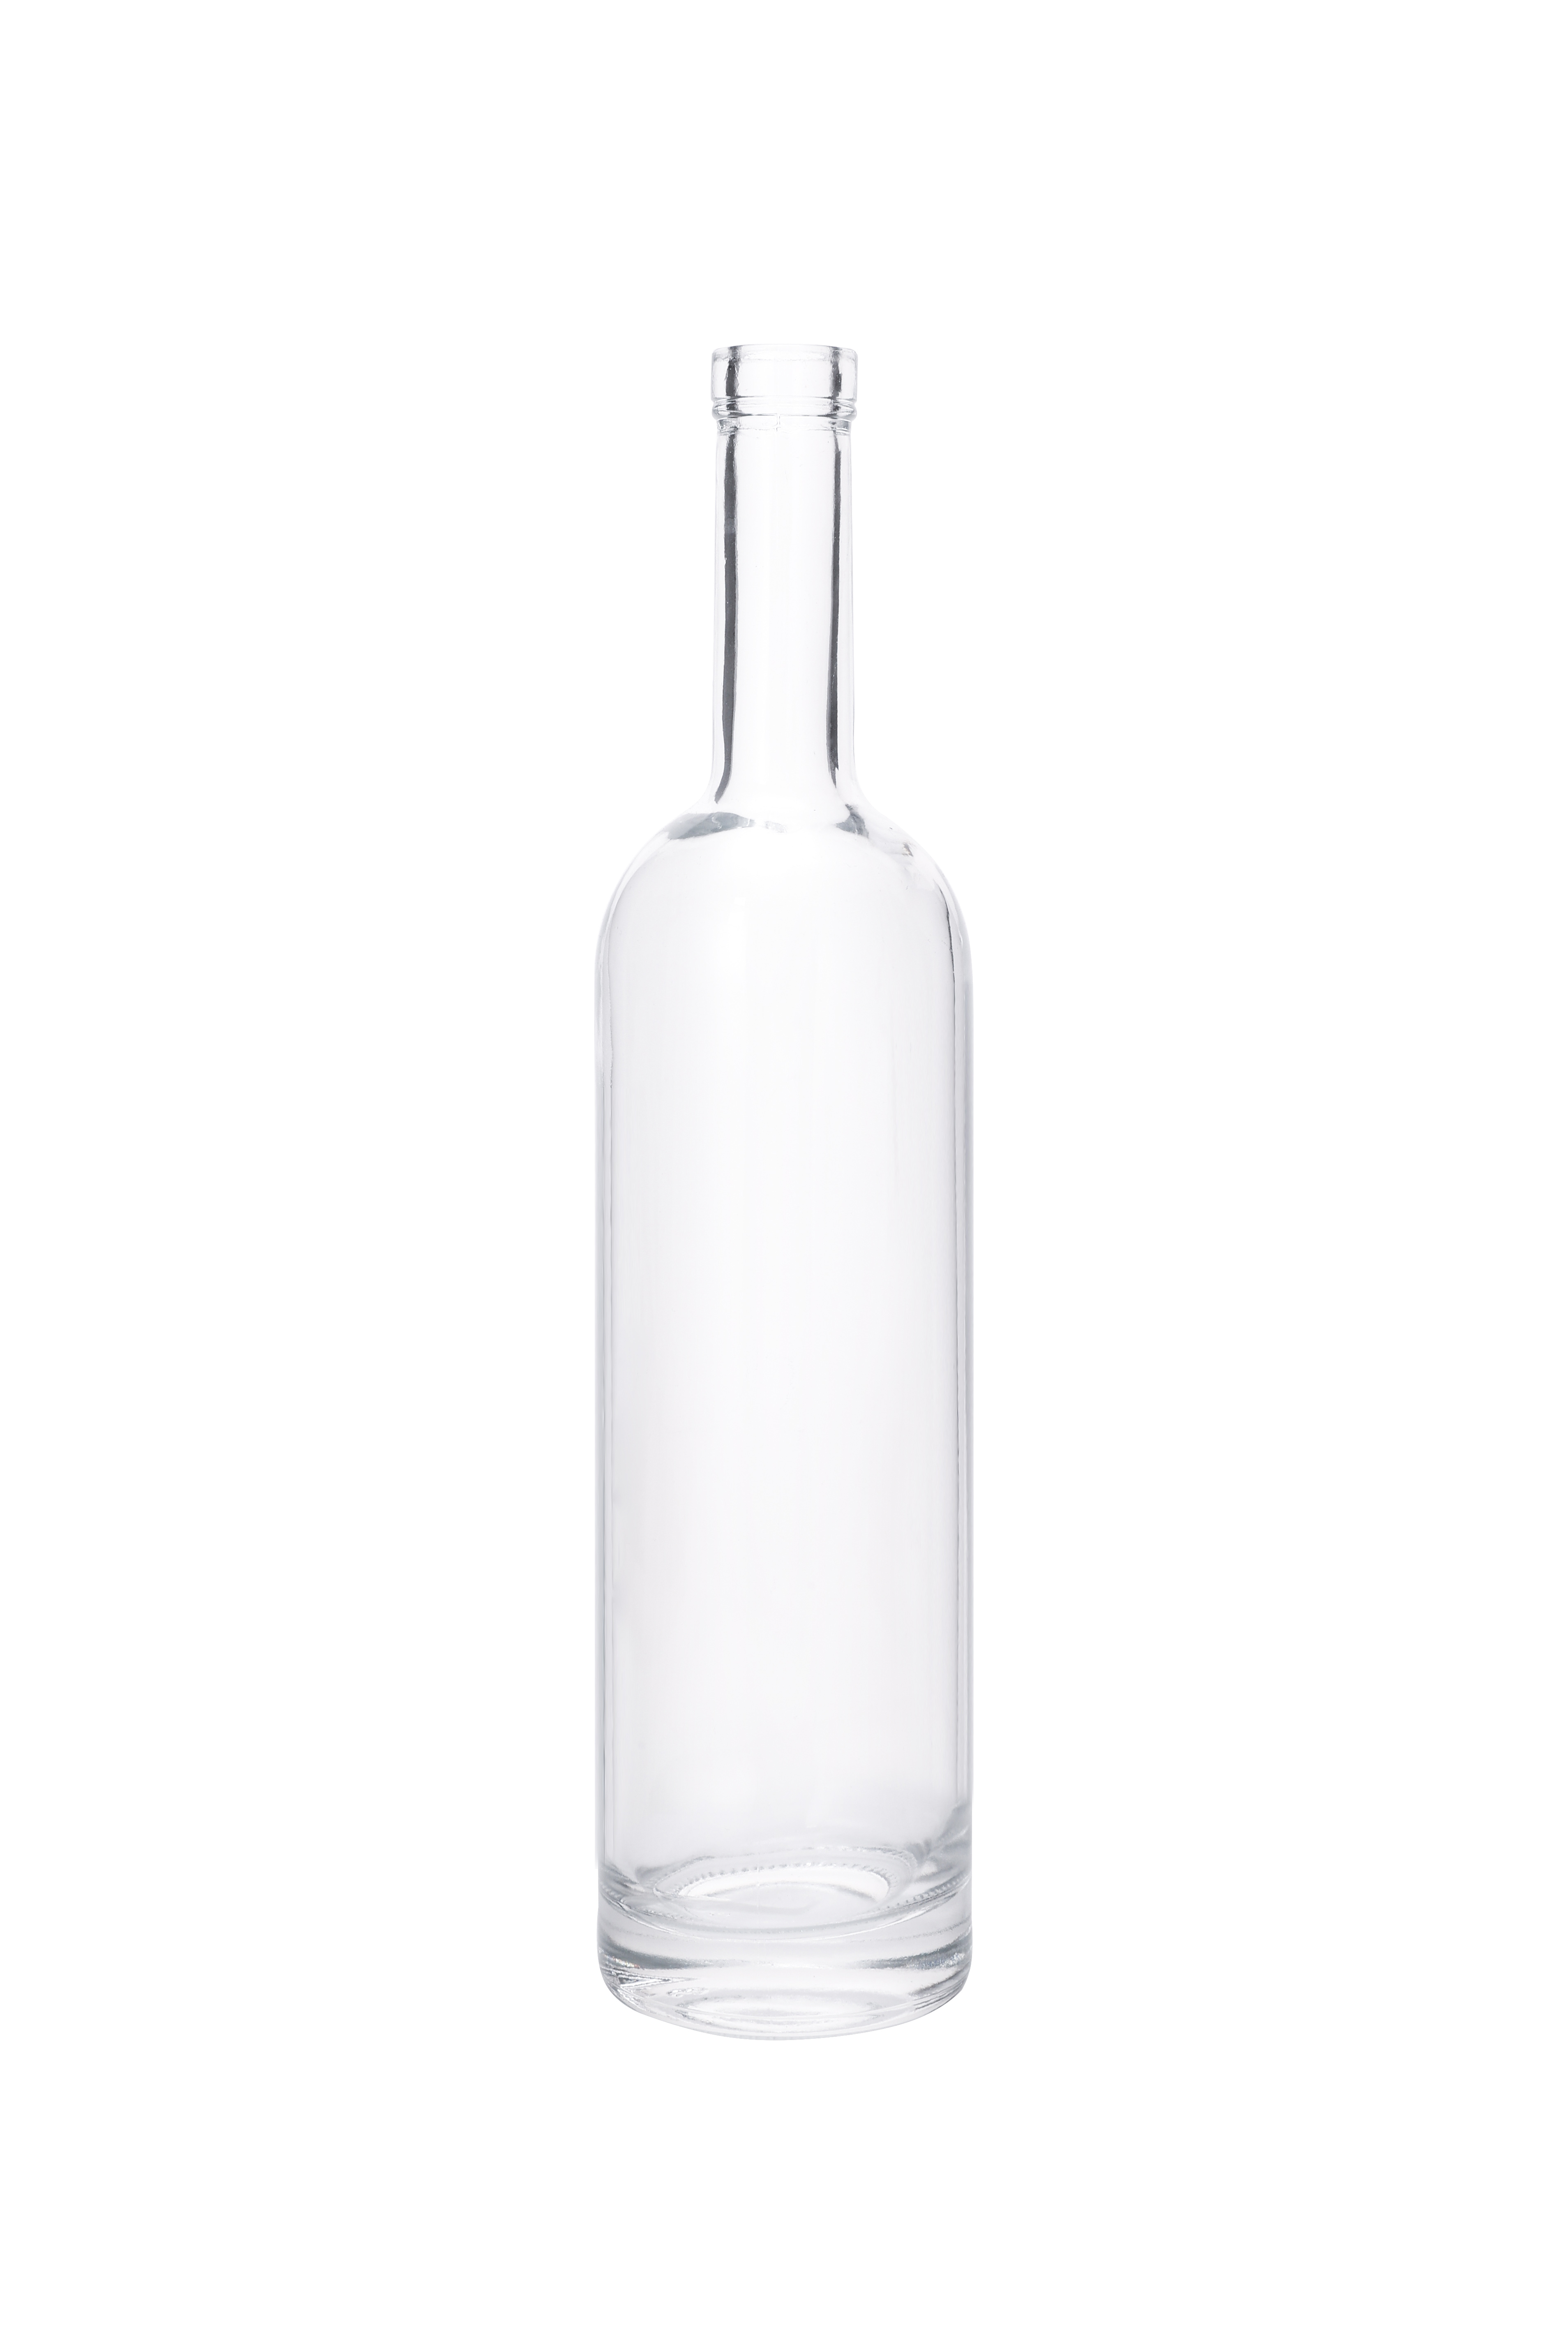 Wholesale Customized Printing 750ml 250ml 500ml Liquor Spirits Whiskey Bottle Glass Whisky Vodka Bottle With Cap